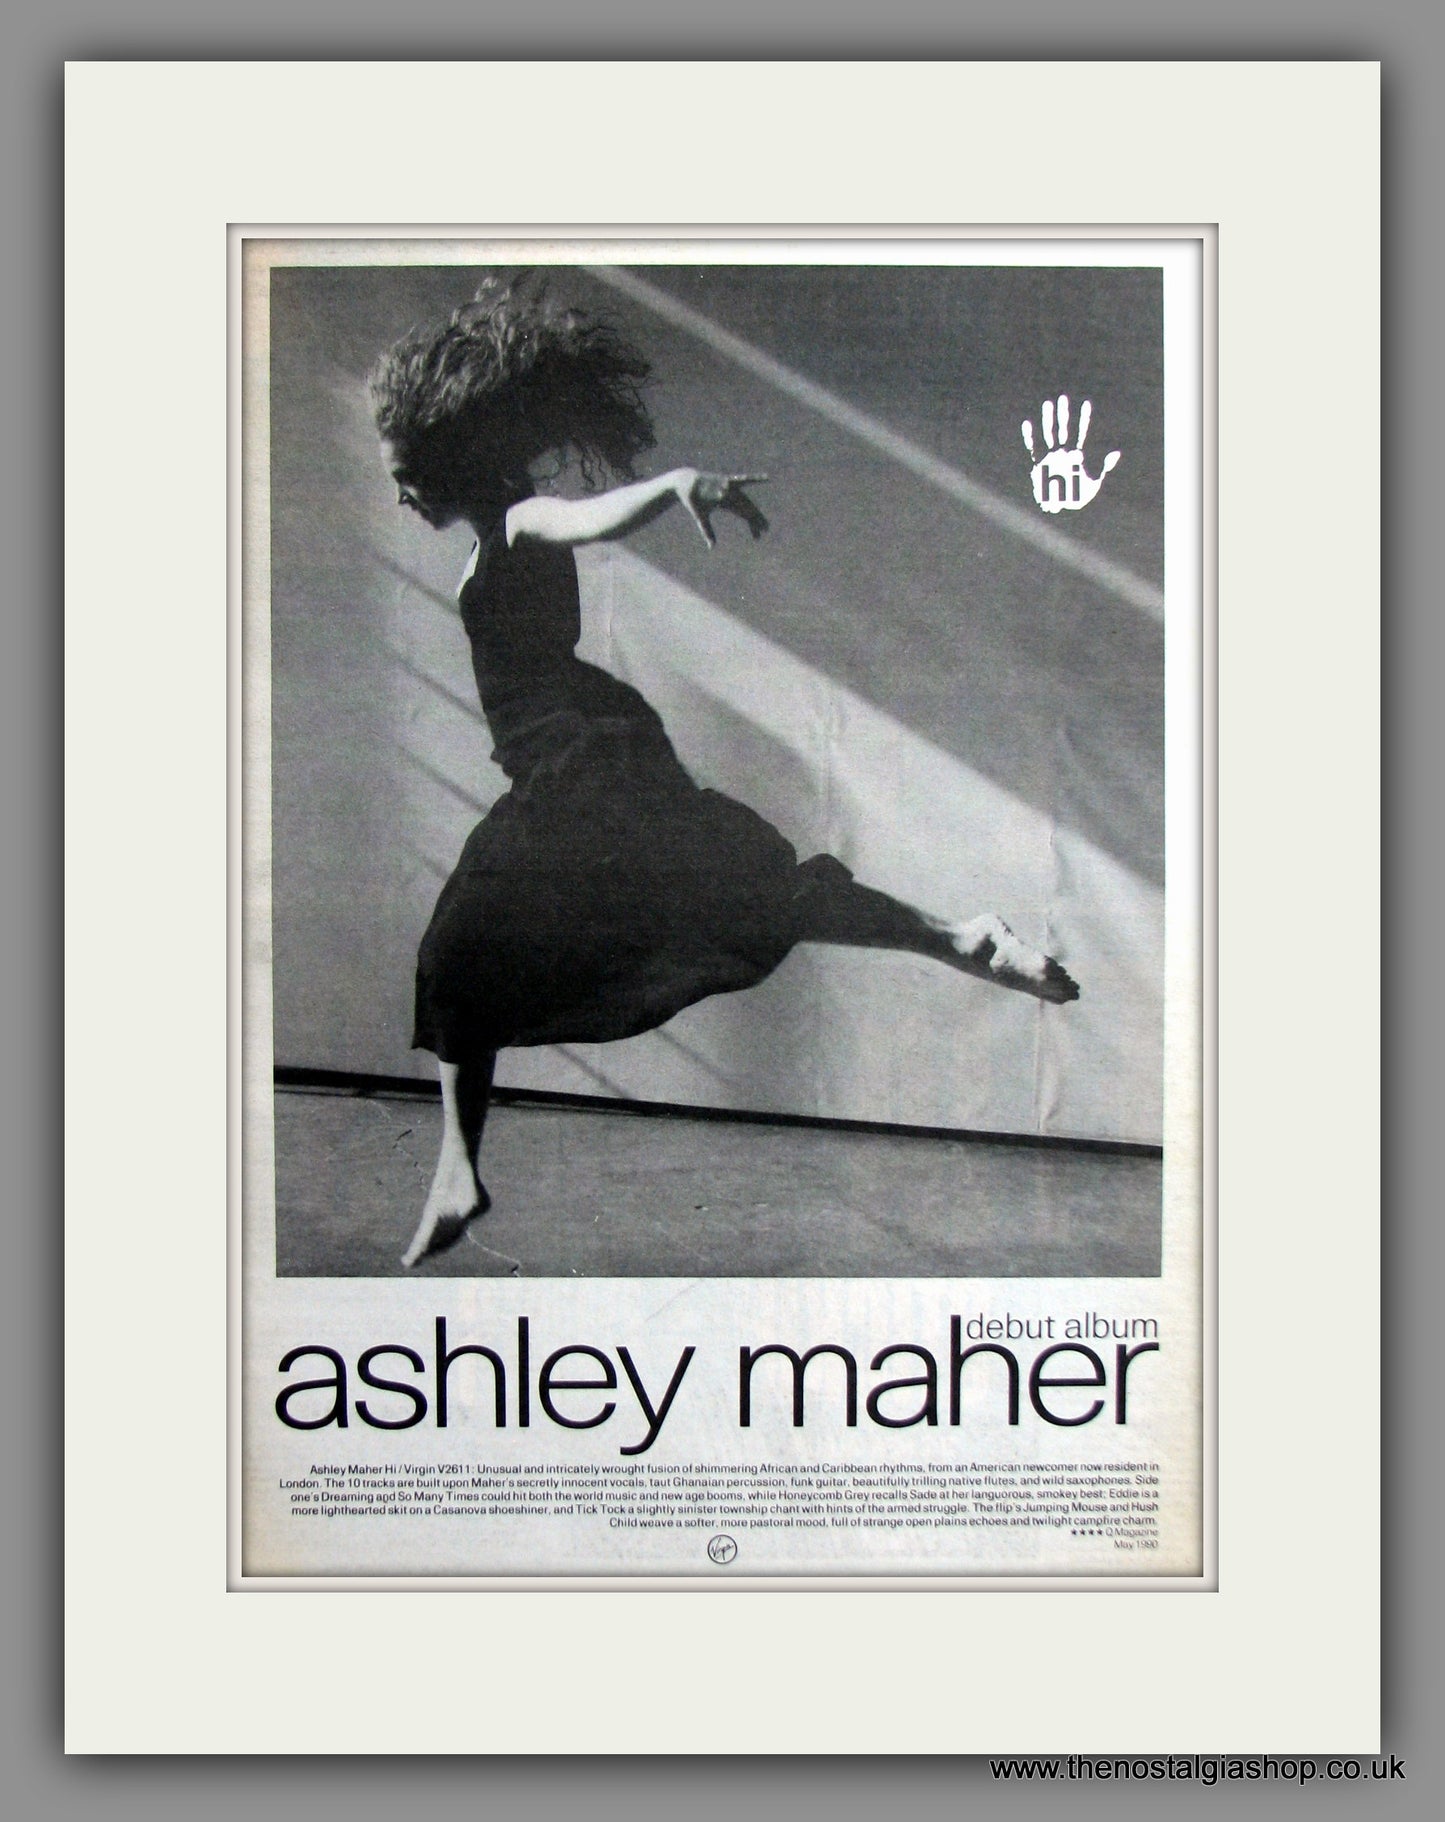 Ashley Maher. Debut Album. Original Advert 1990 (ref AD11486)